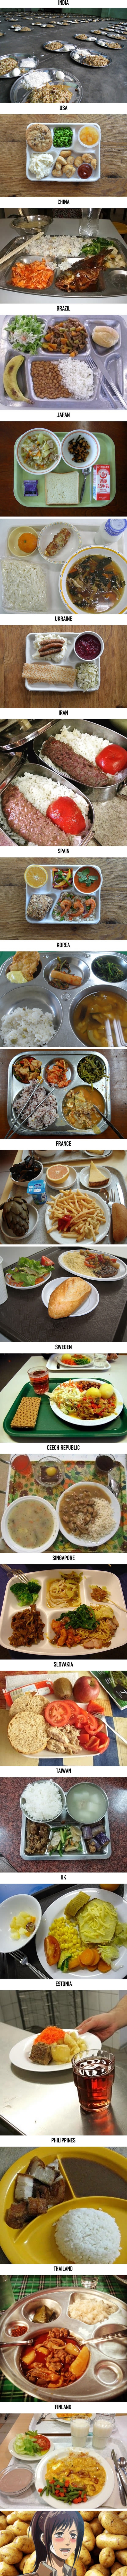 School lunches around the world